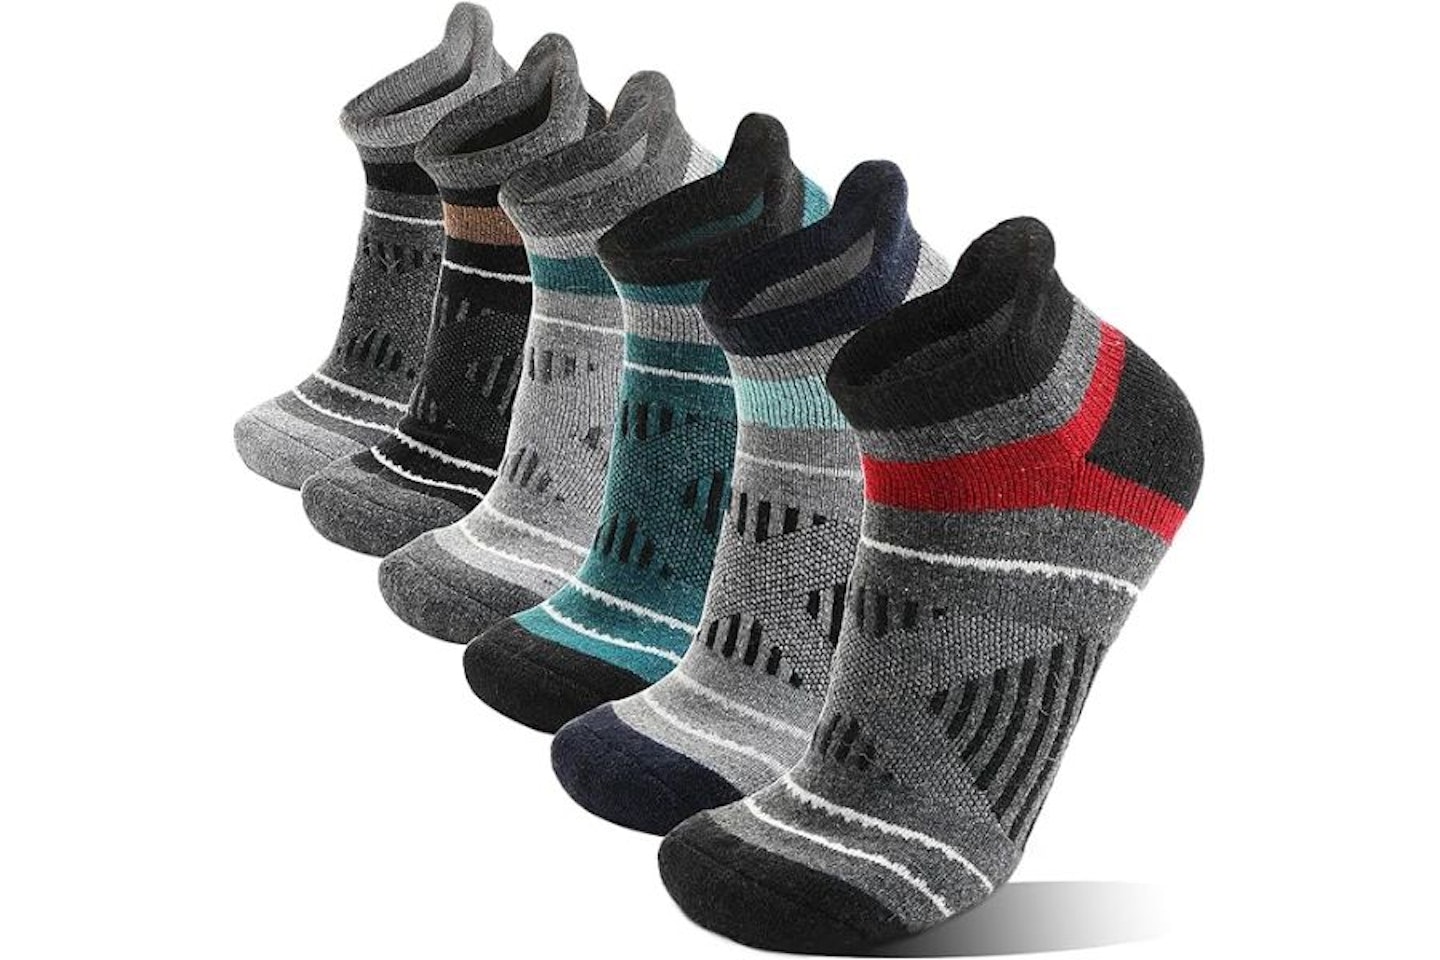 EBMORE Merino Wool Thermal Walking Socks